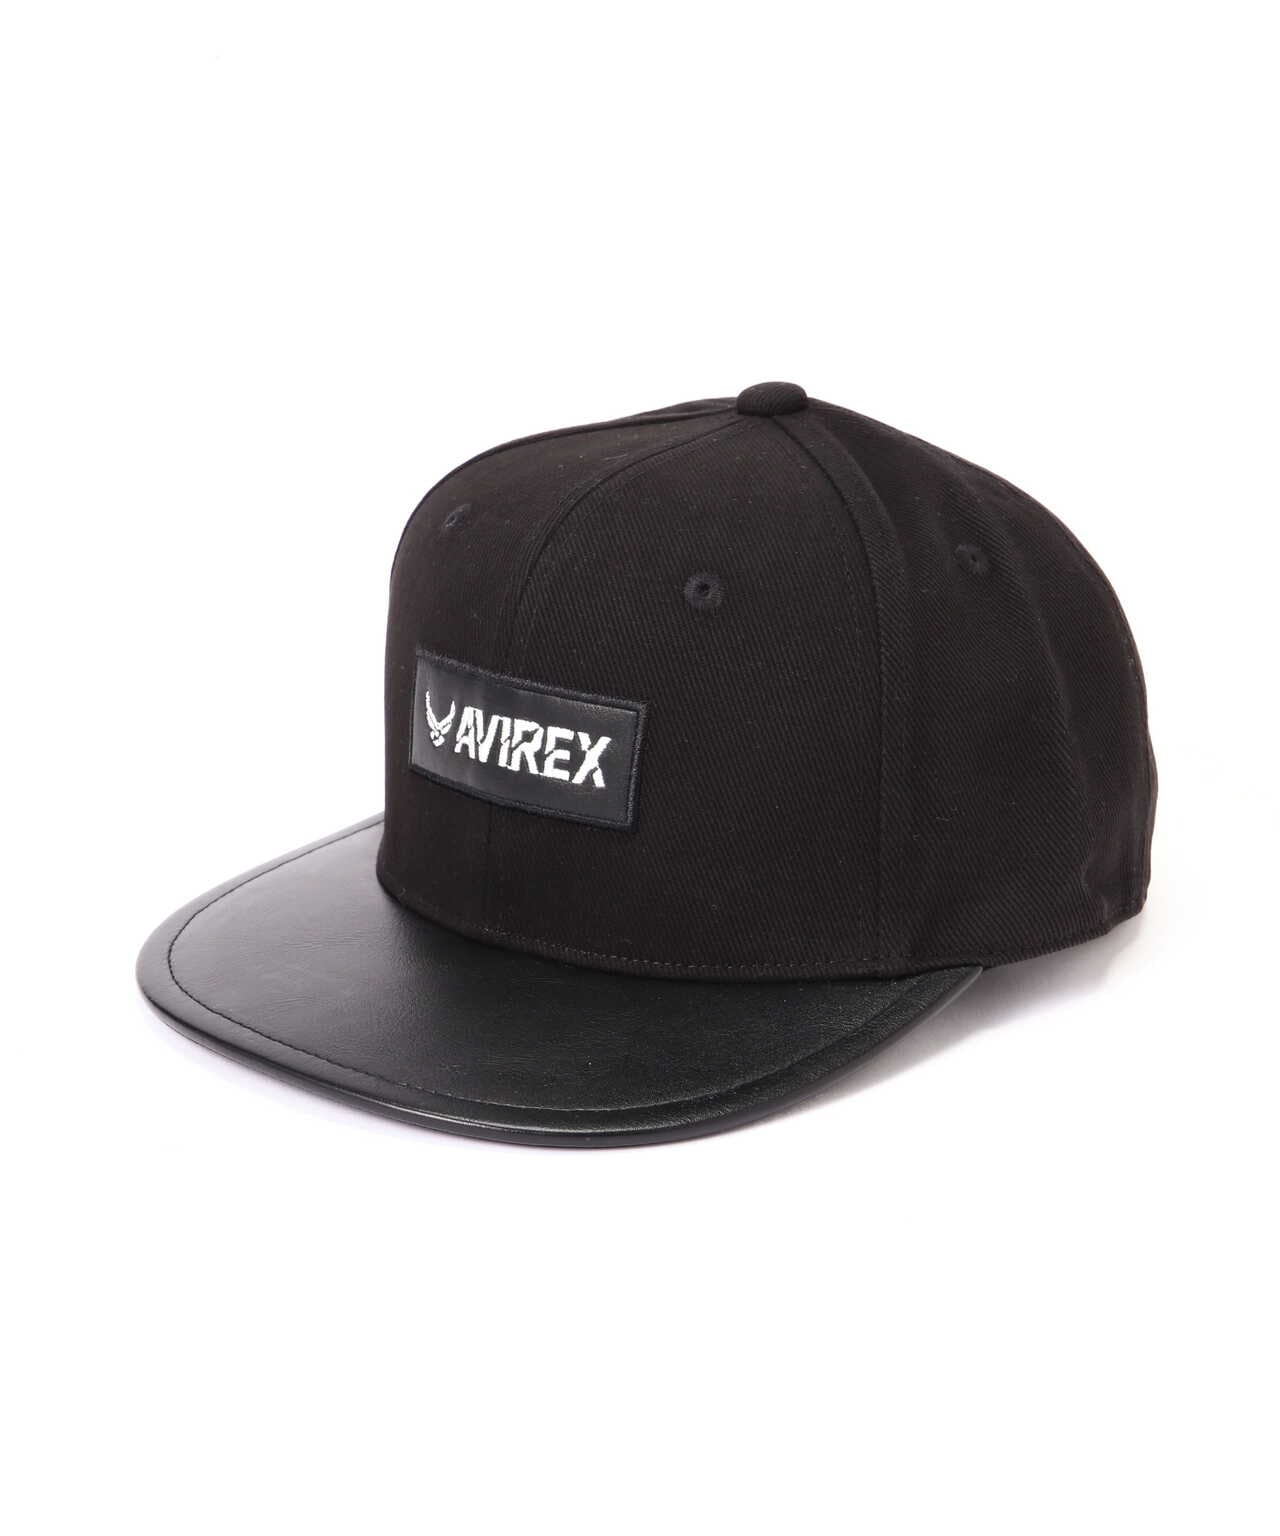 《AVIREX GOLF》メタリック フラット CAP/ゴルフキャップ/帽子